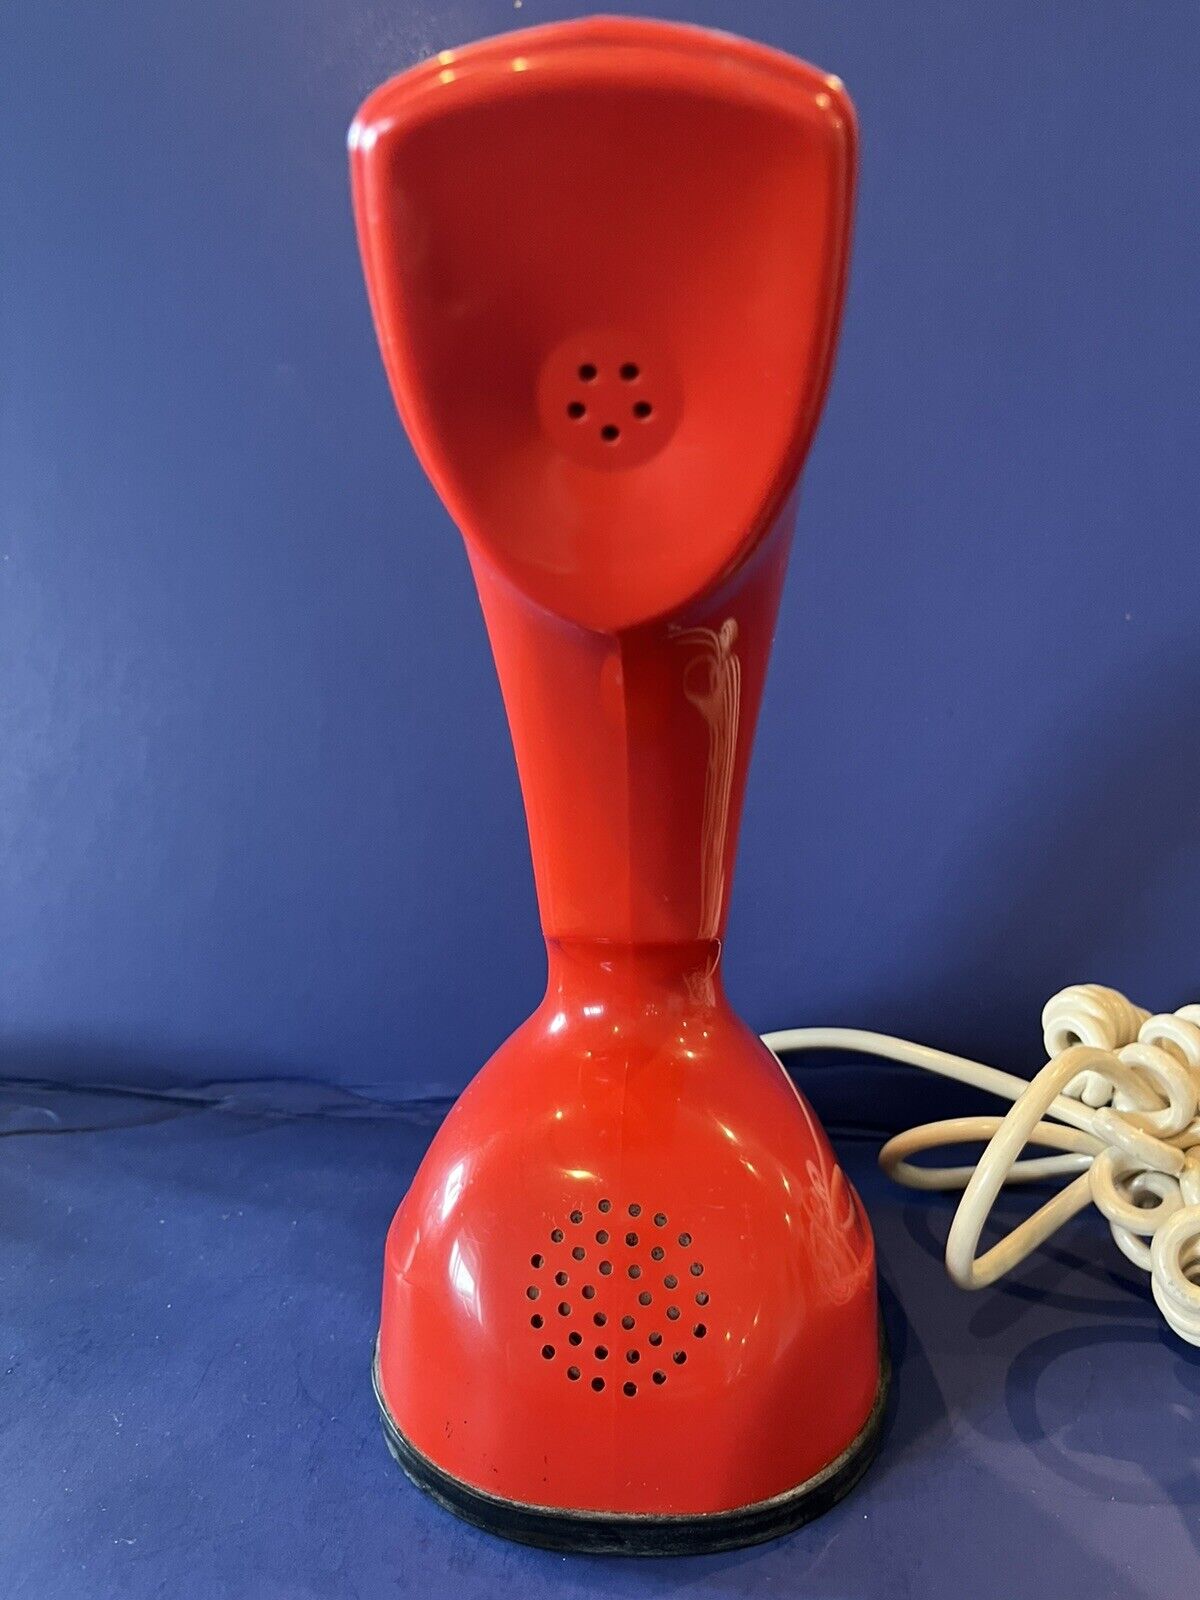 Northern Electric Cobra Ericofon MCM Working Red Telephone  